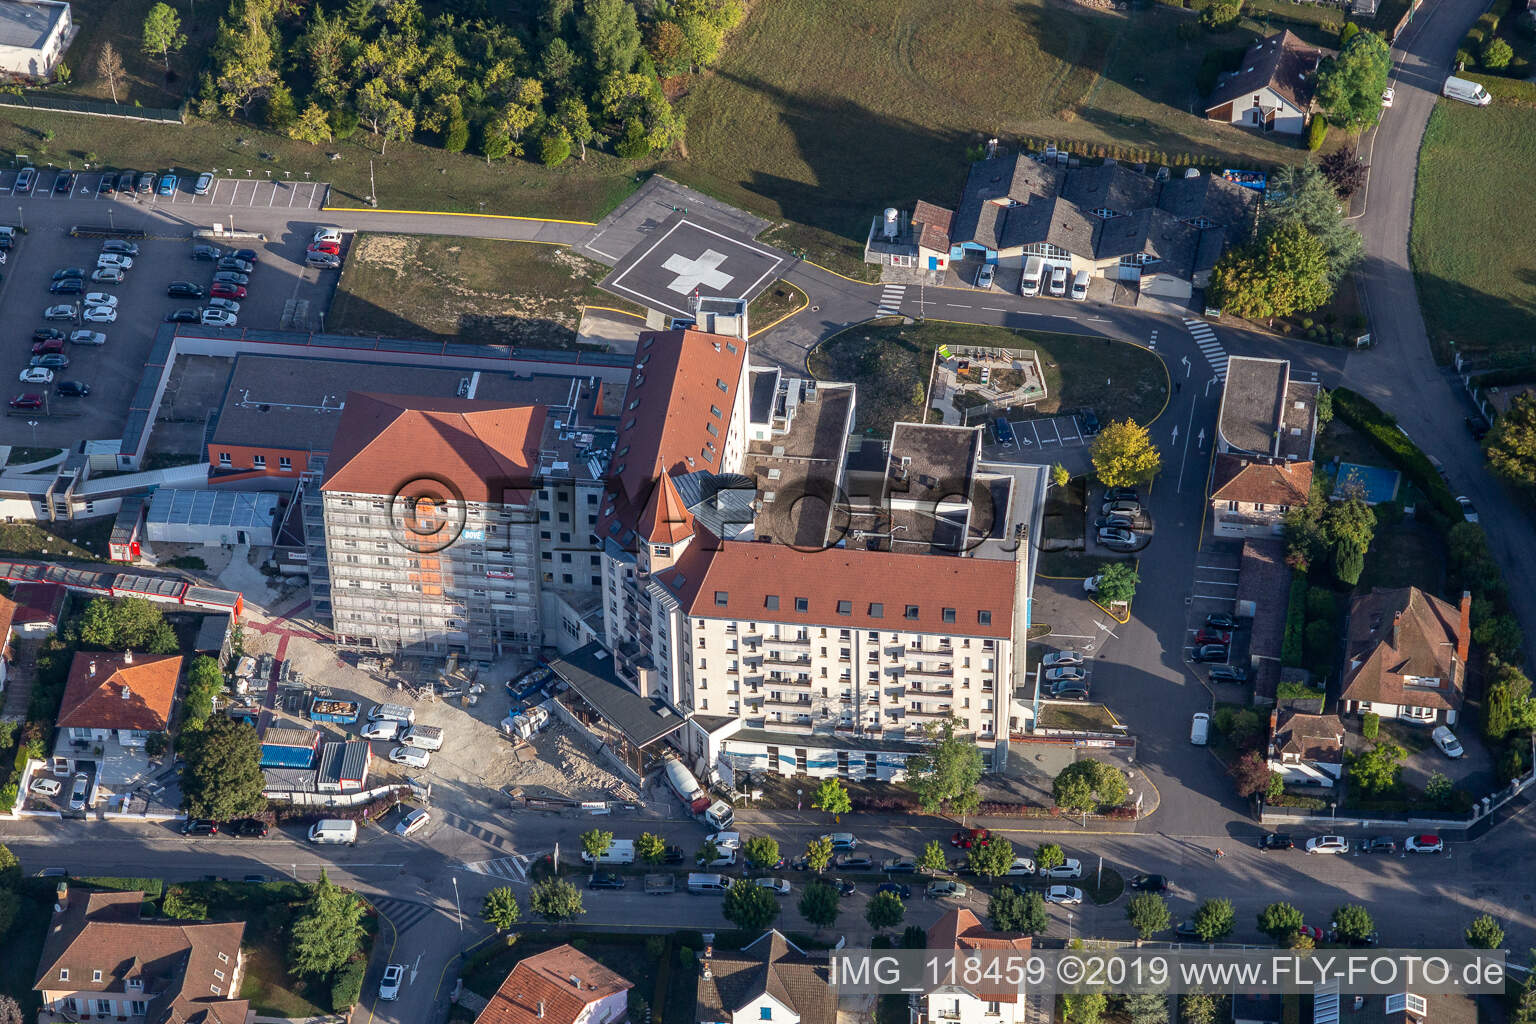 Centre Hospitalier de l'Ouest Vosgien in Vittel im Bundesland Vosges, Frankreich